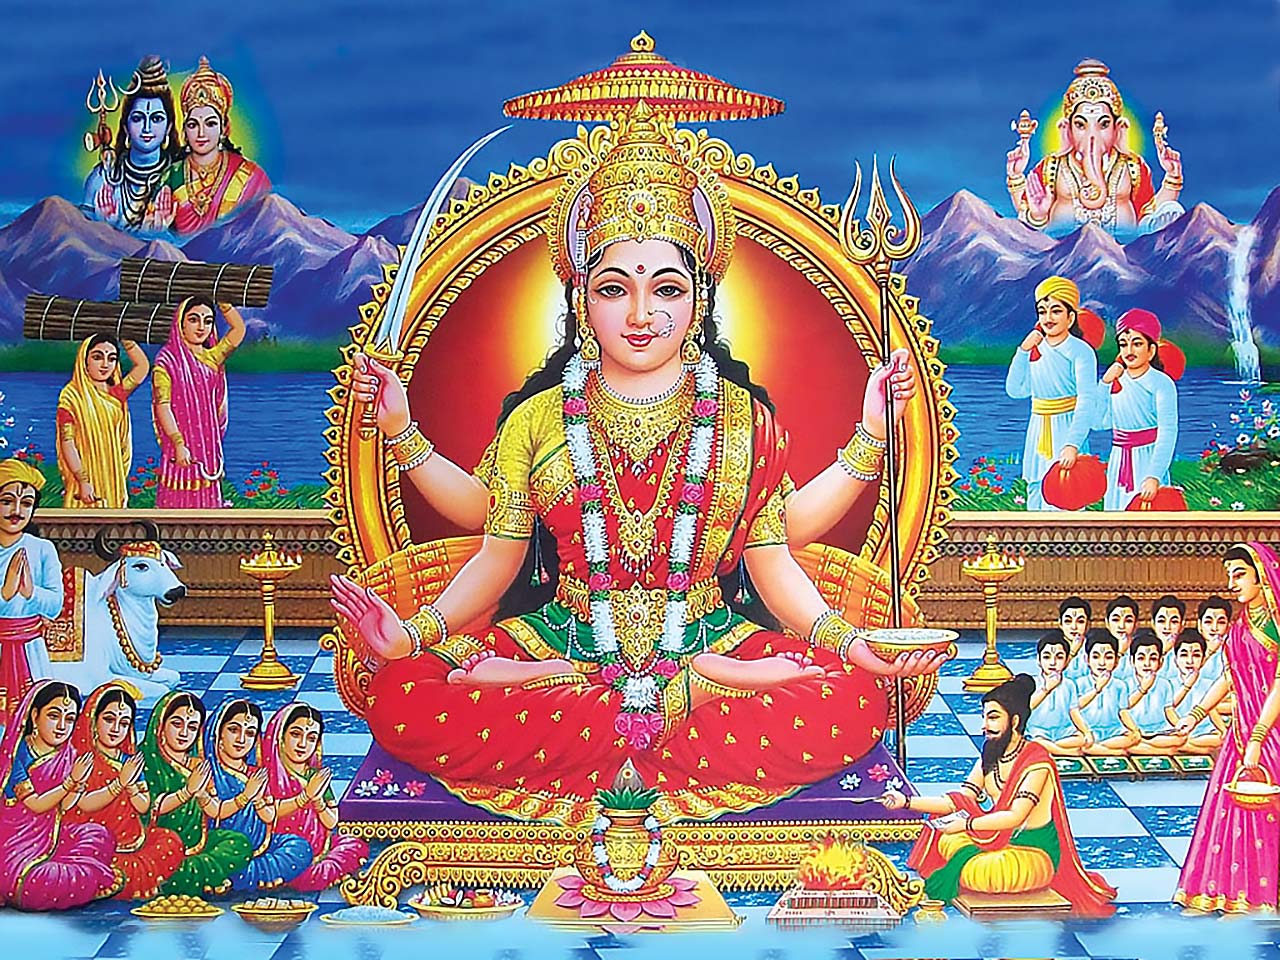 Shri Santoshi Mata Chalisa